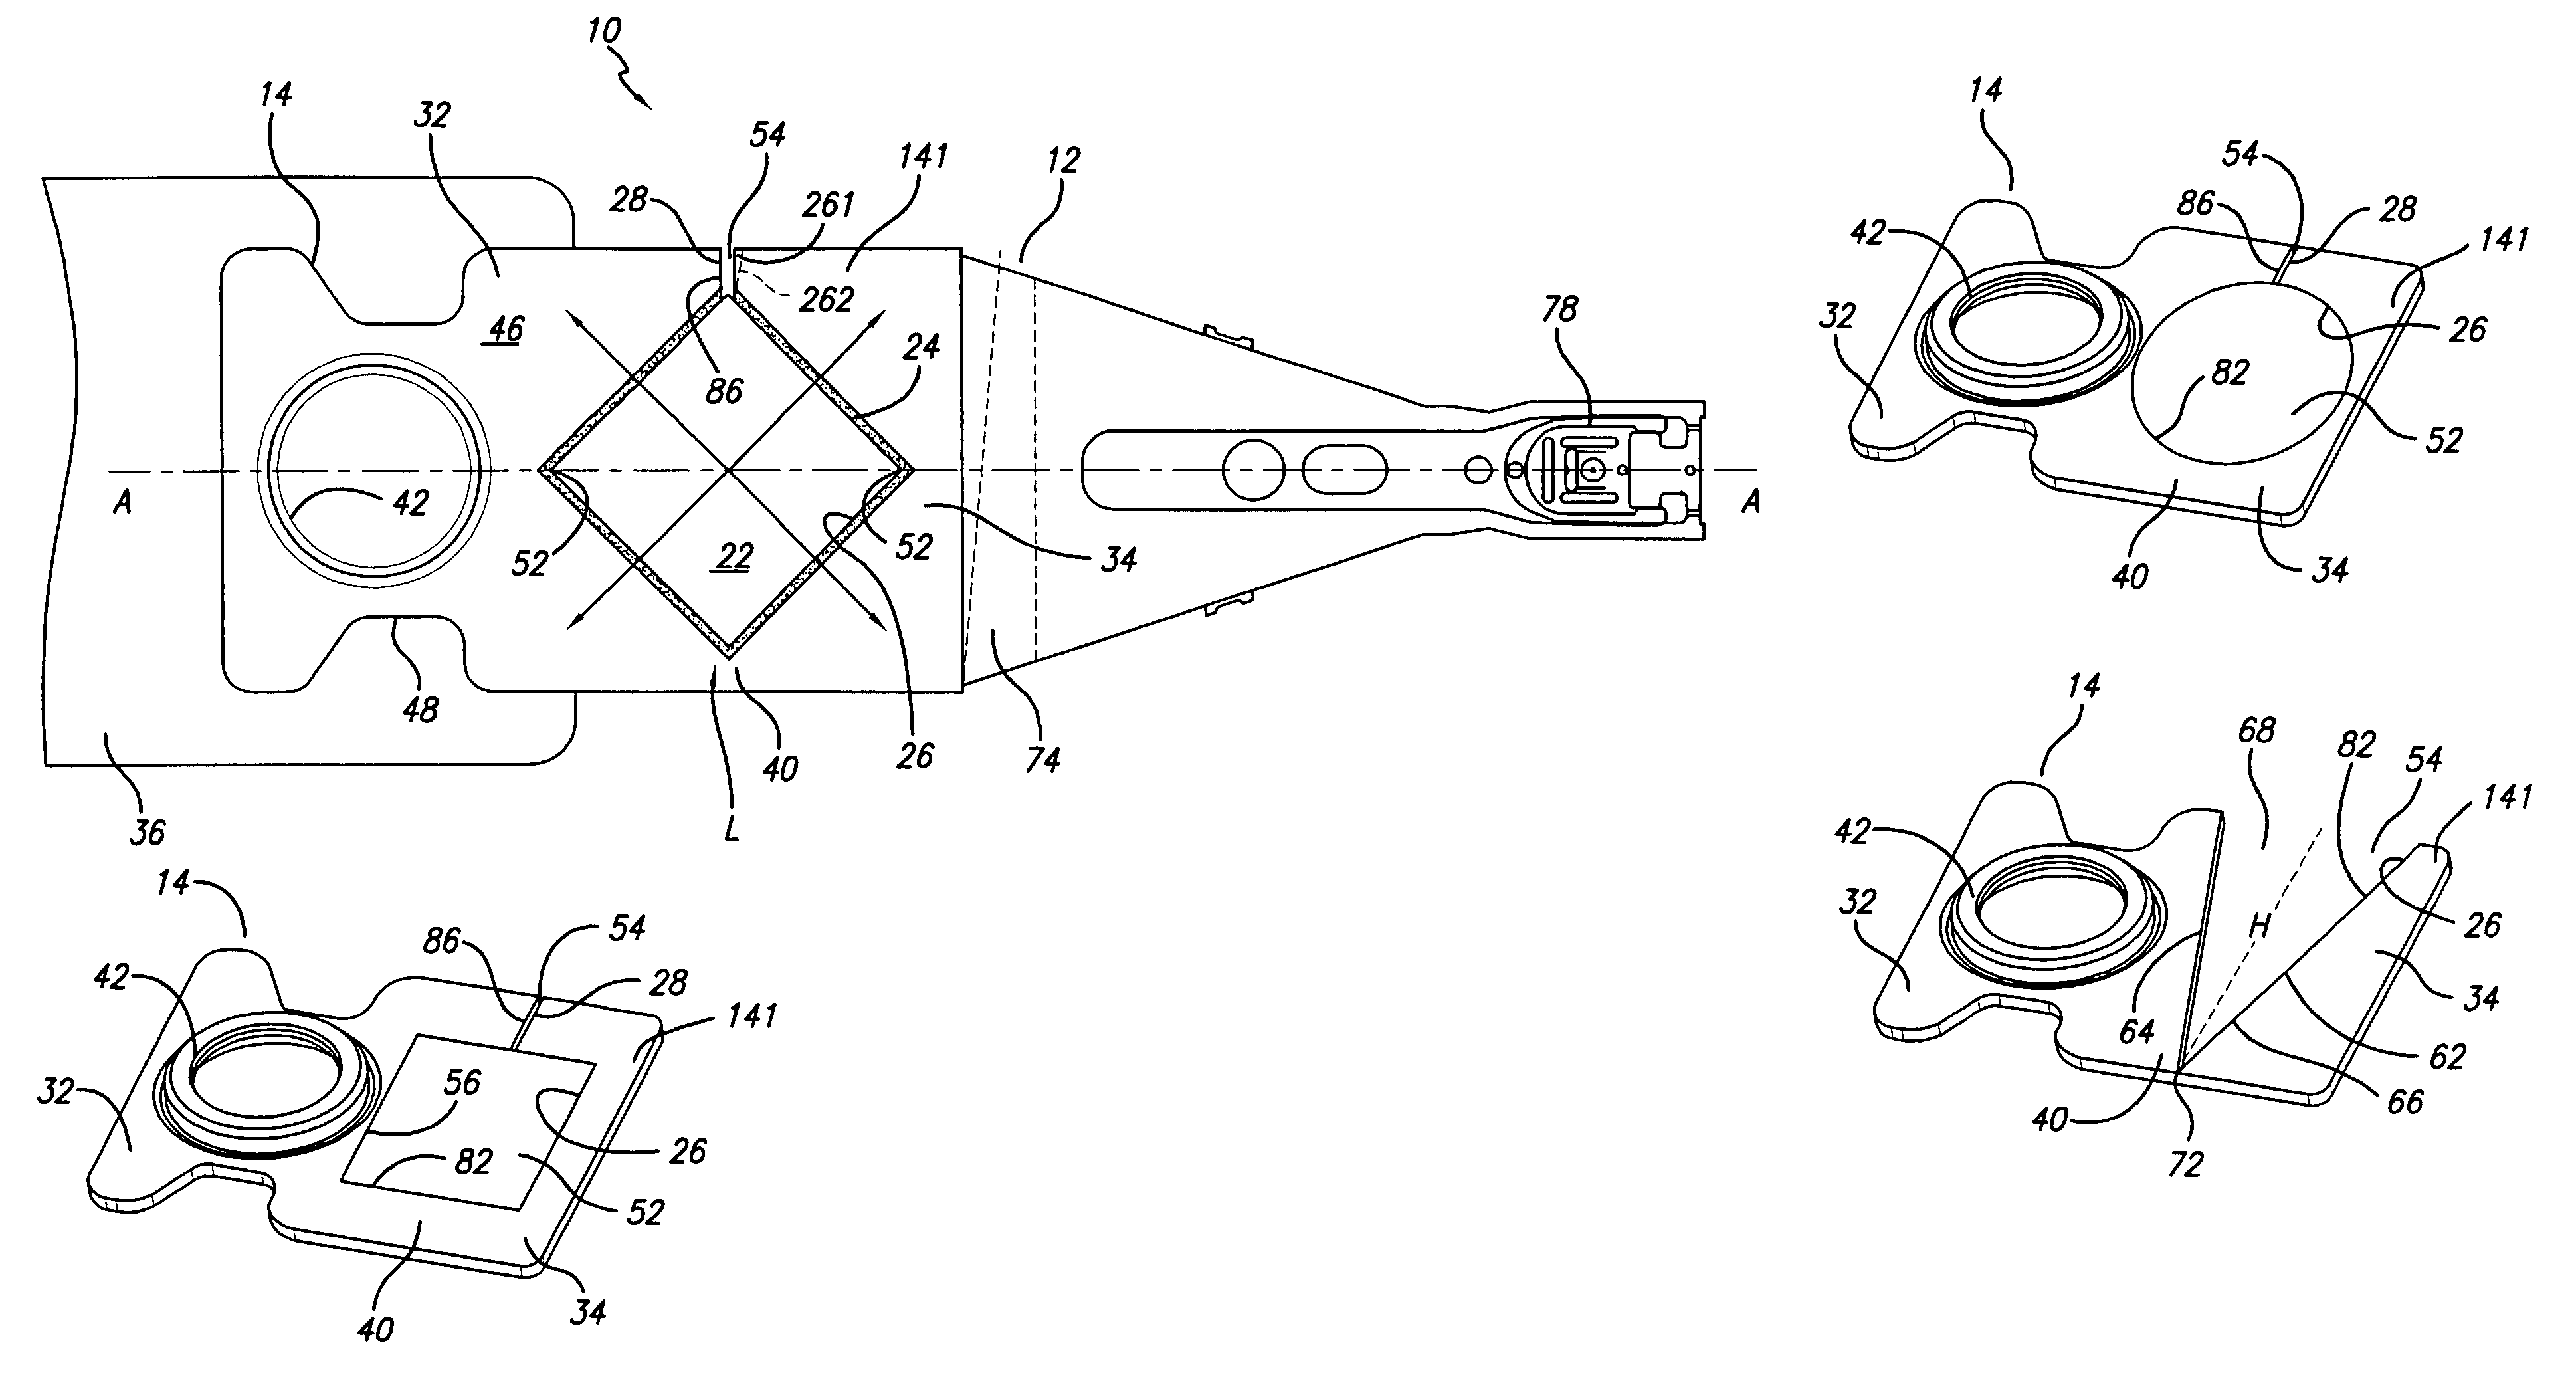 Head gimbal assembly with dual-mode piezo microactuator